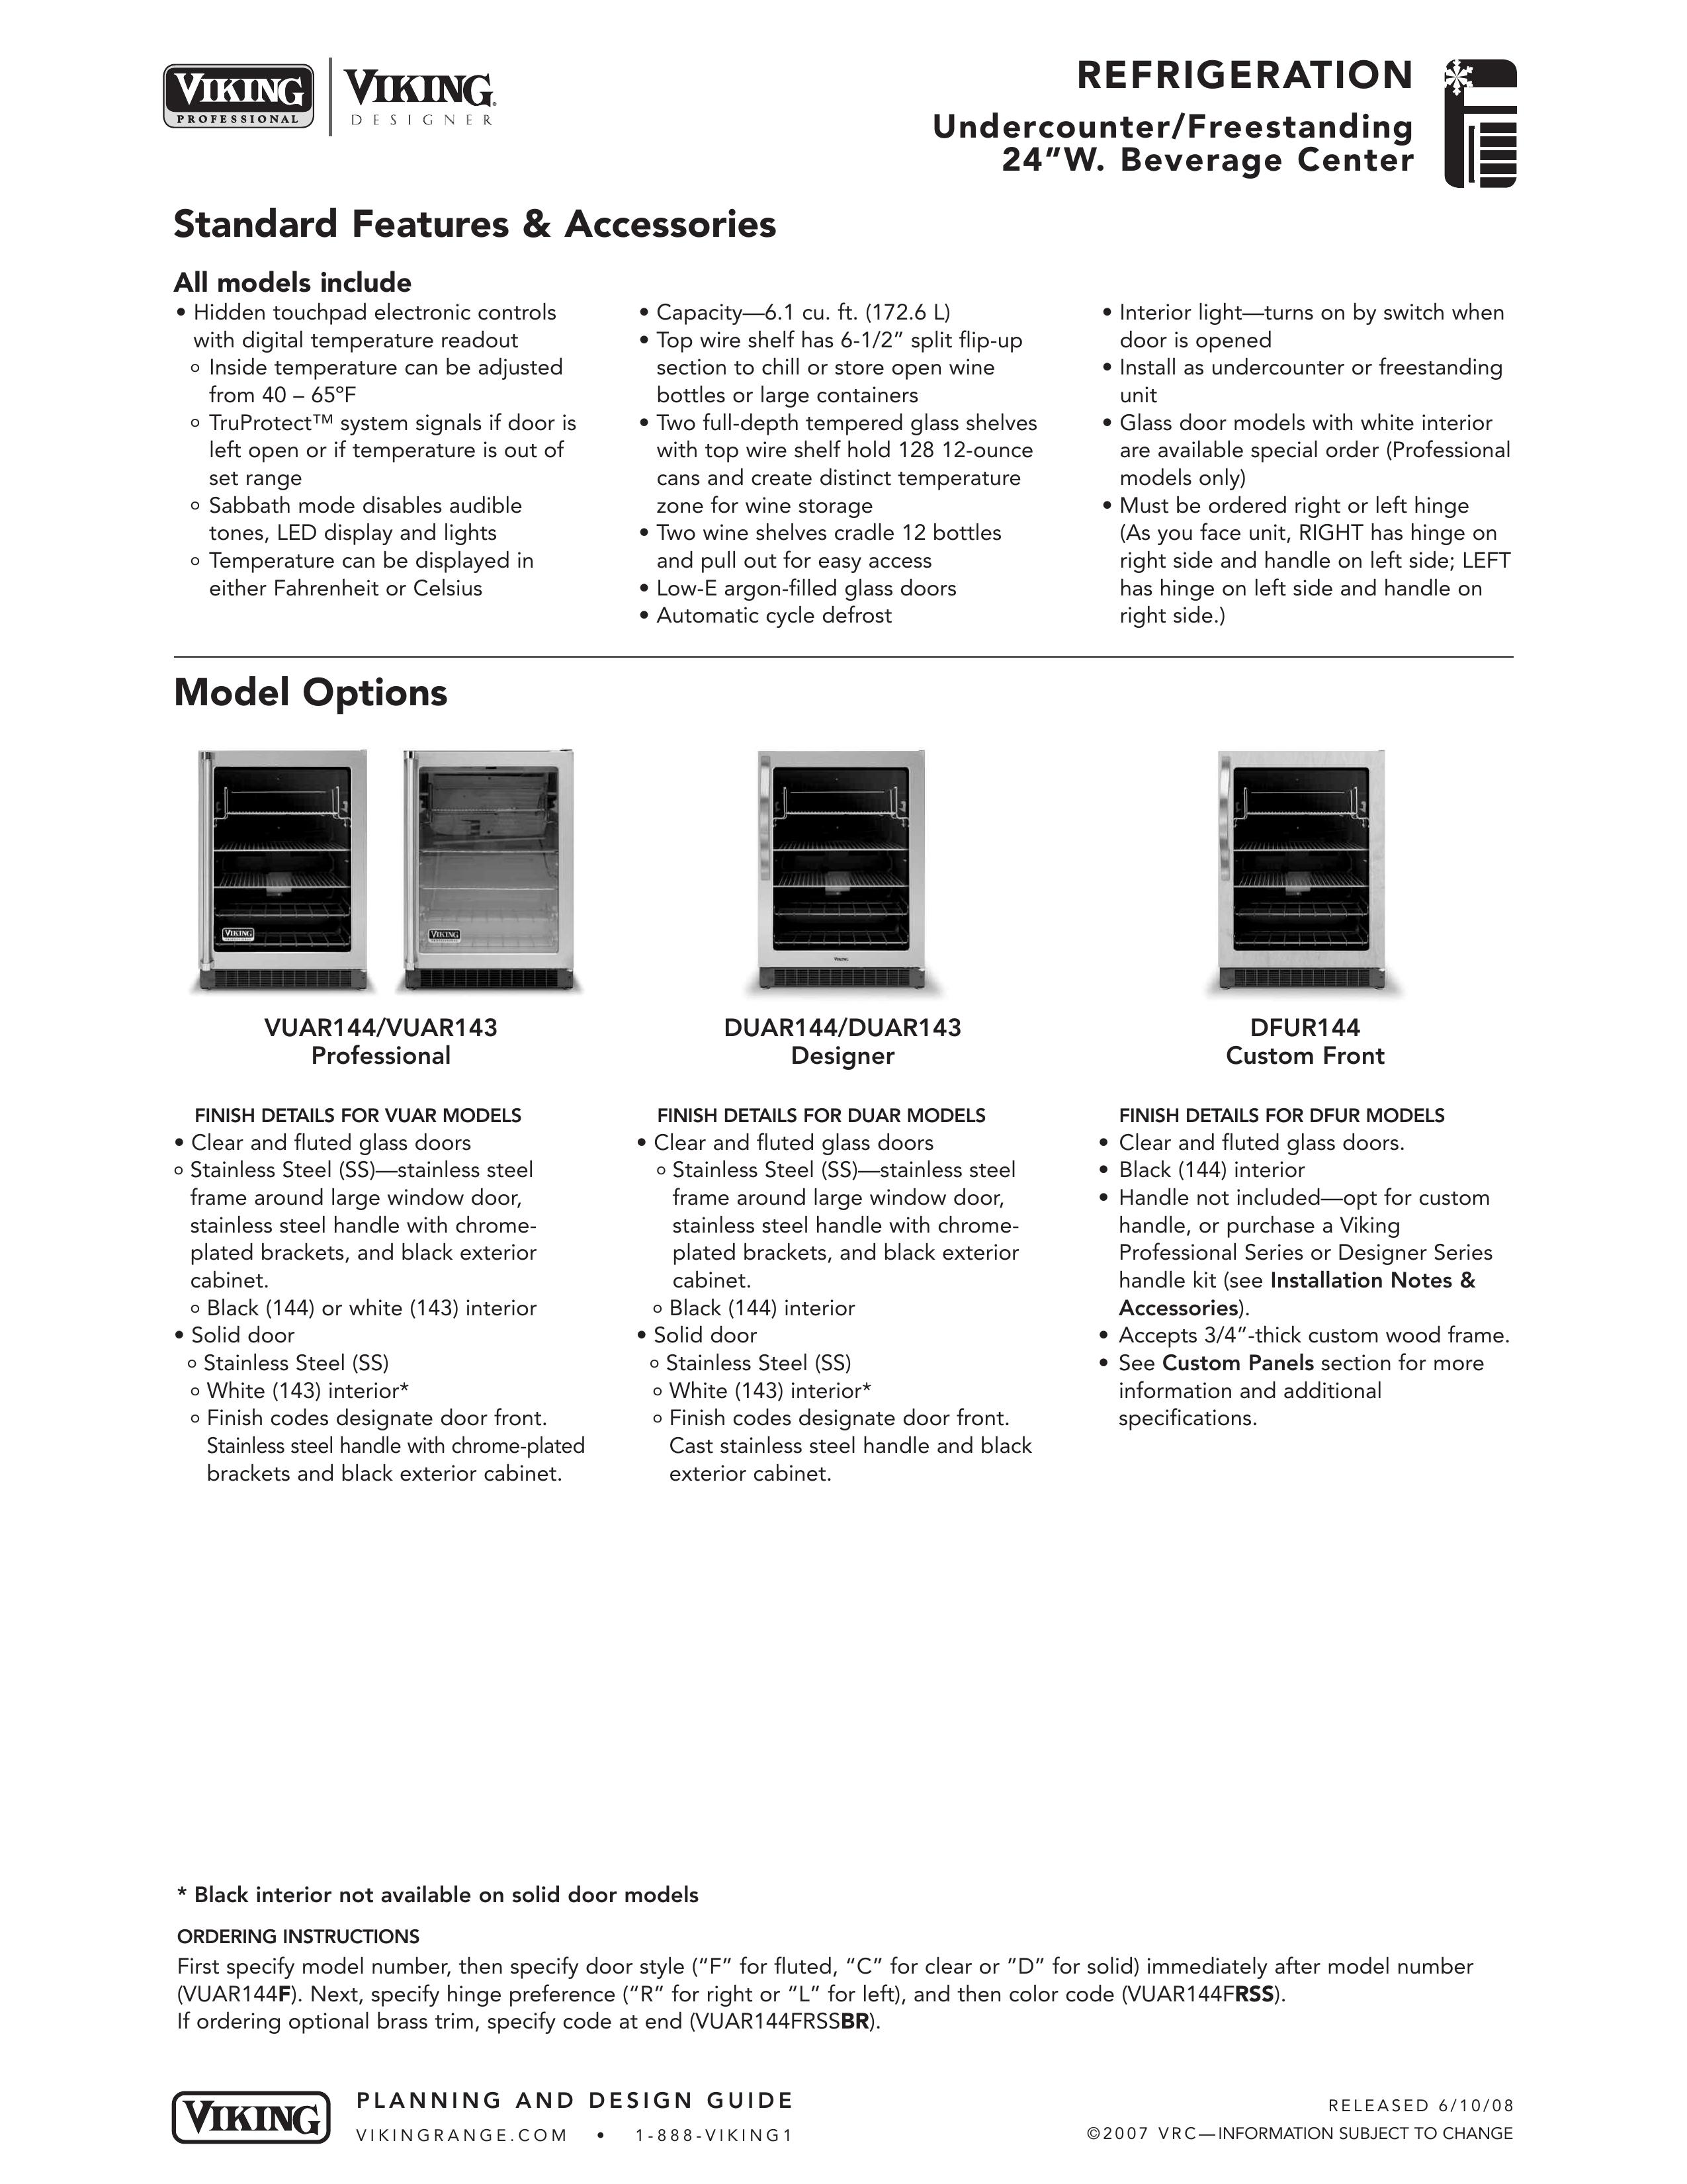 Viking DFUR144 Refrigerator User Manual